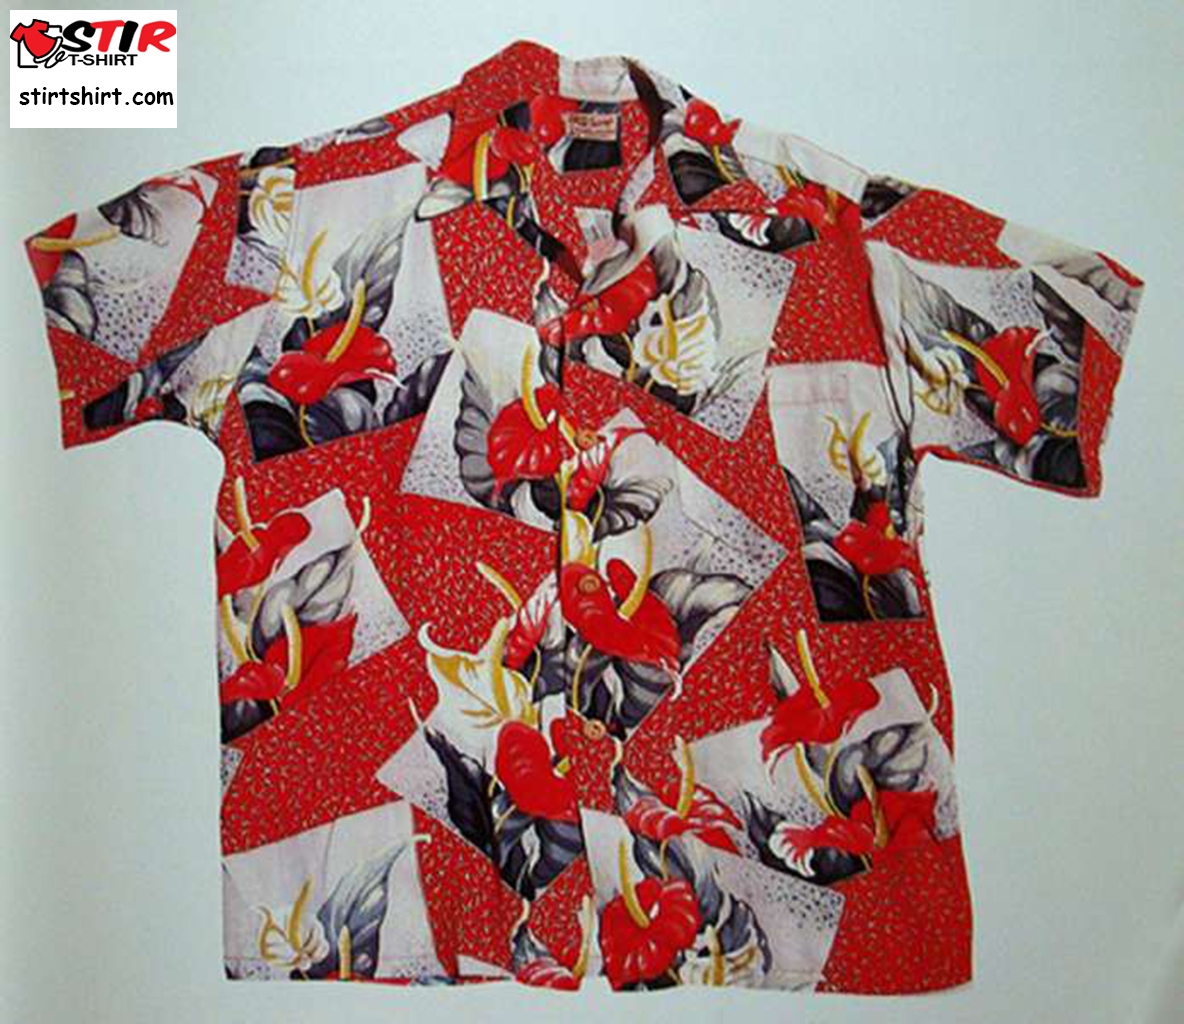 How To Identify Vintage Hawaiian Shirts (2)  Vintage s